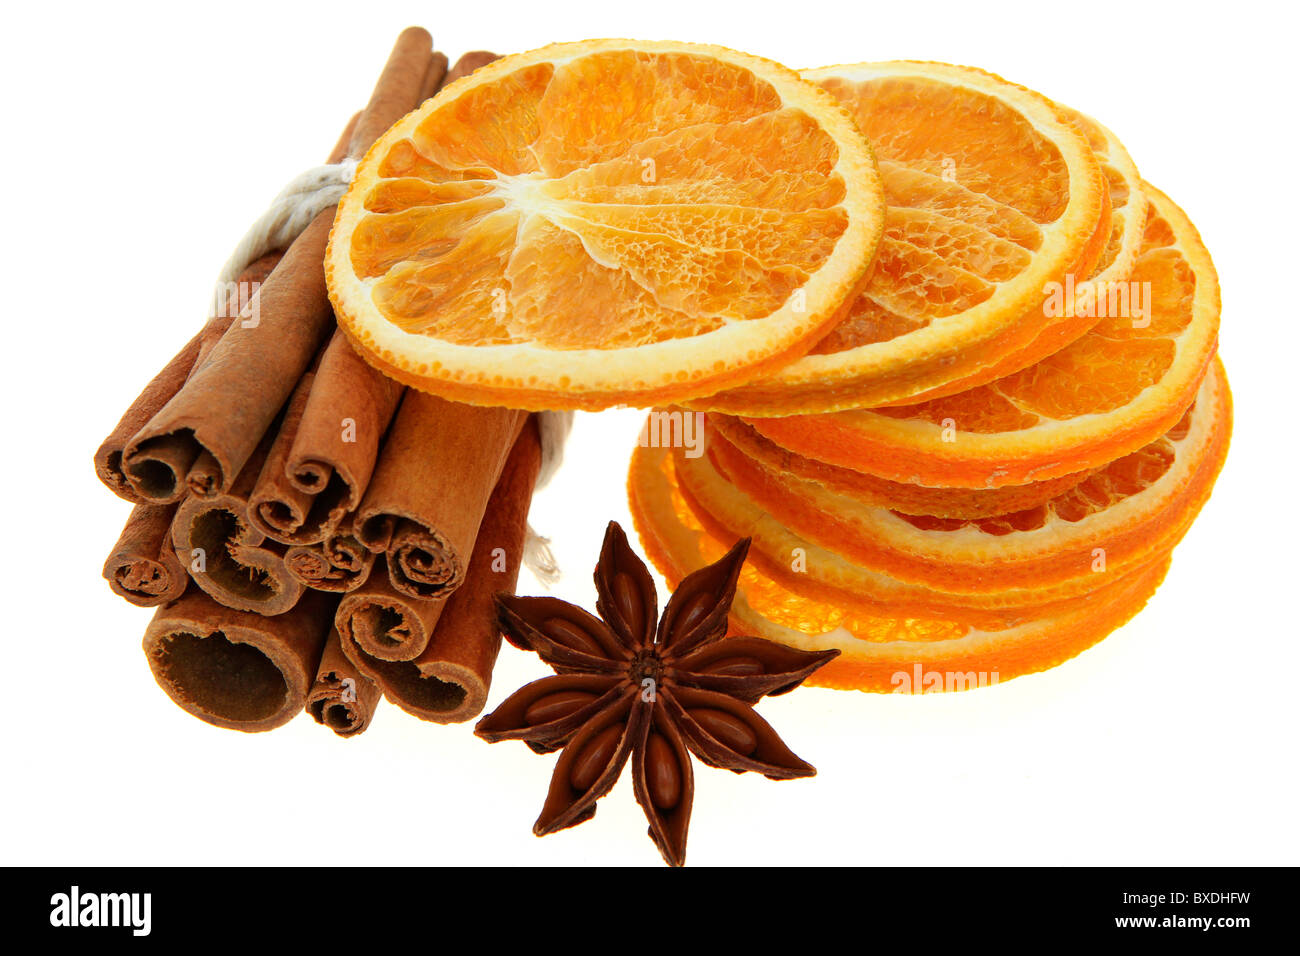 christmas decoration, dried orange, cinnamon and anise Stock Photo